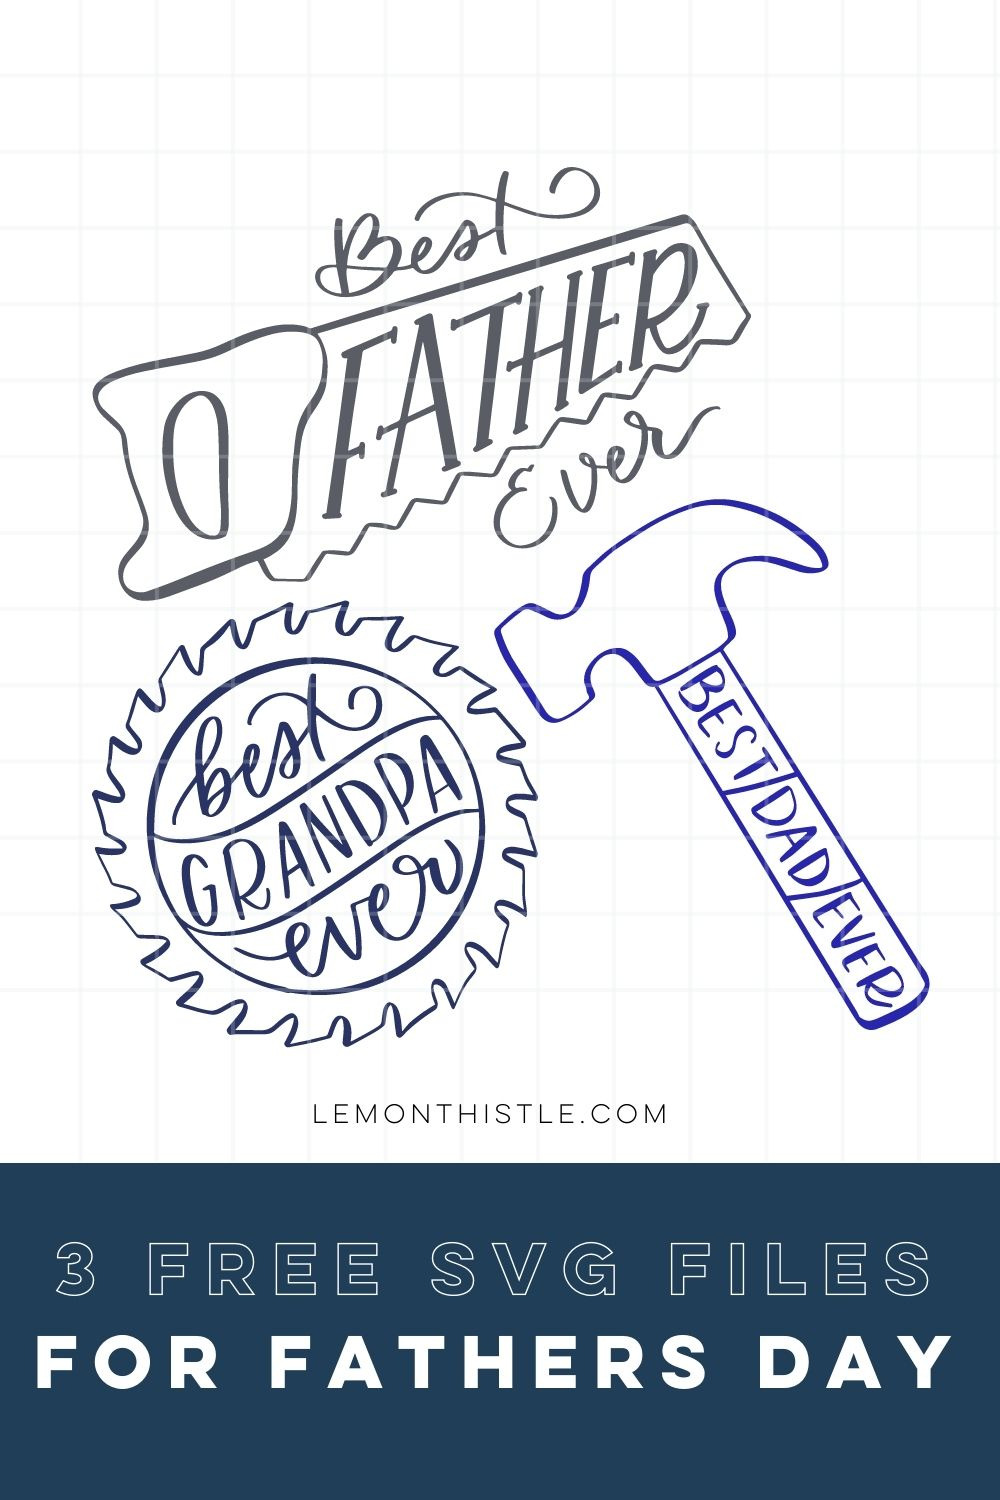 DIY Father's Day Gift Ideas - Domestically Creative